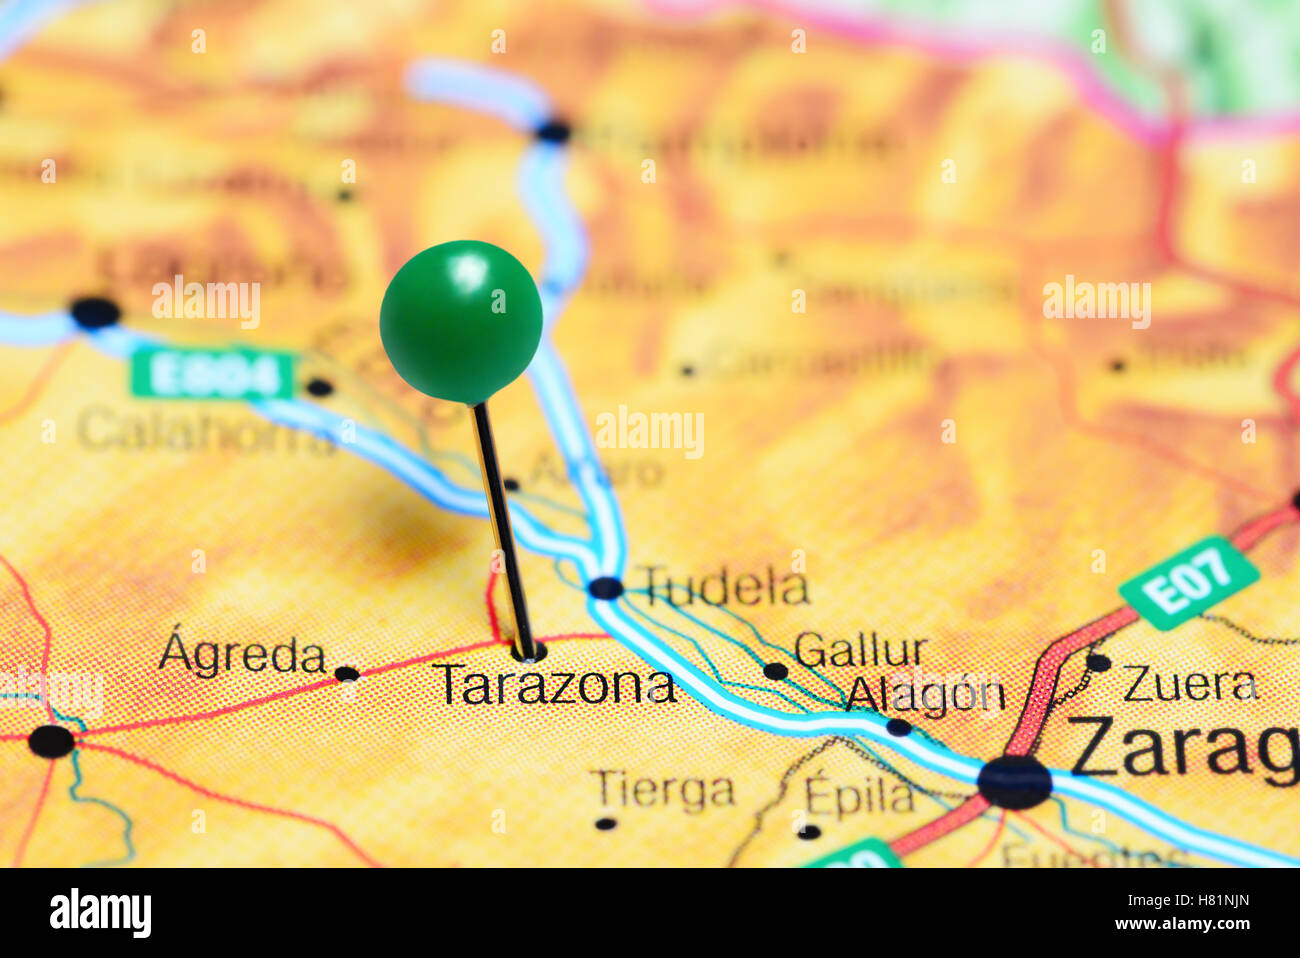 Tarazona pinned on a map of Spain Stock Photo